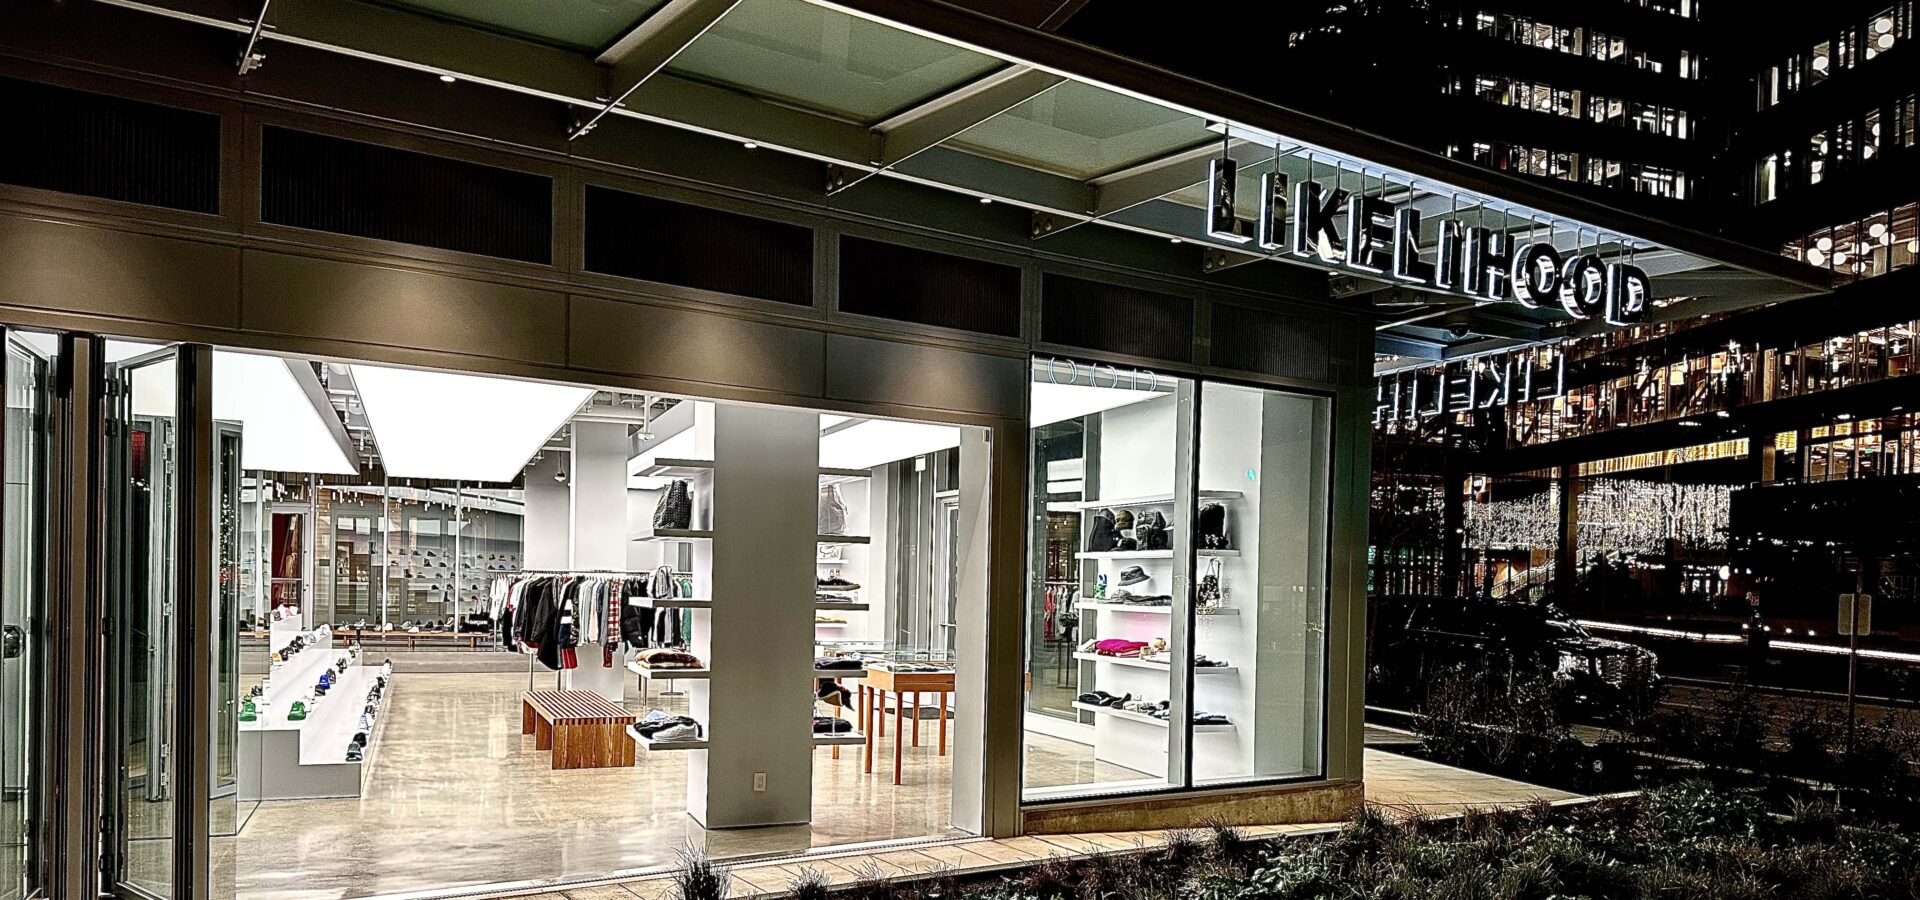 Seattle Kraken opens flagship store in South Lake Union